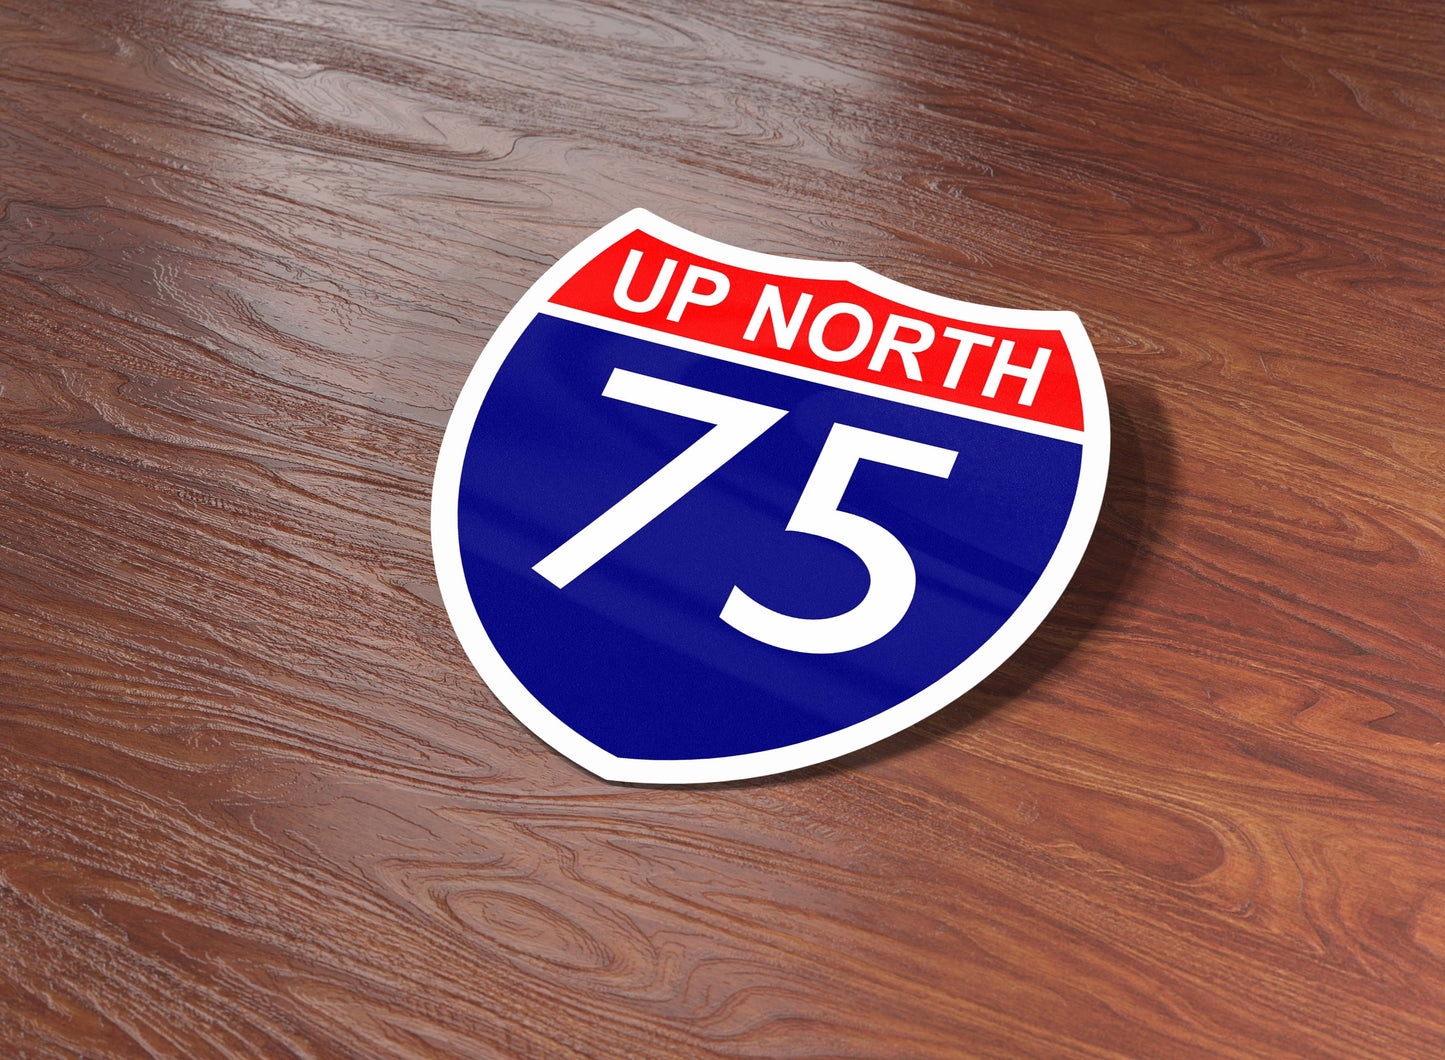 I-75 Up North Sticker